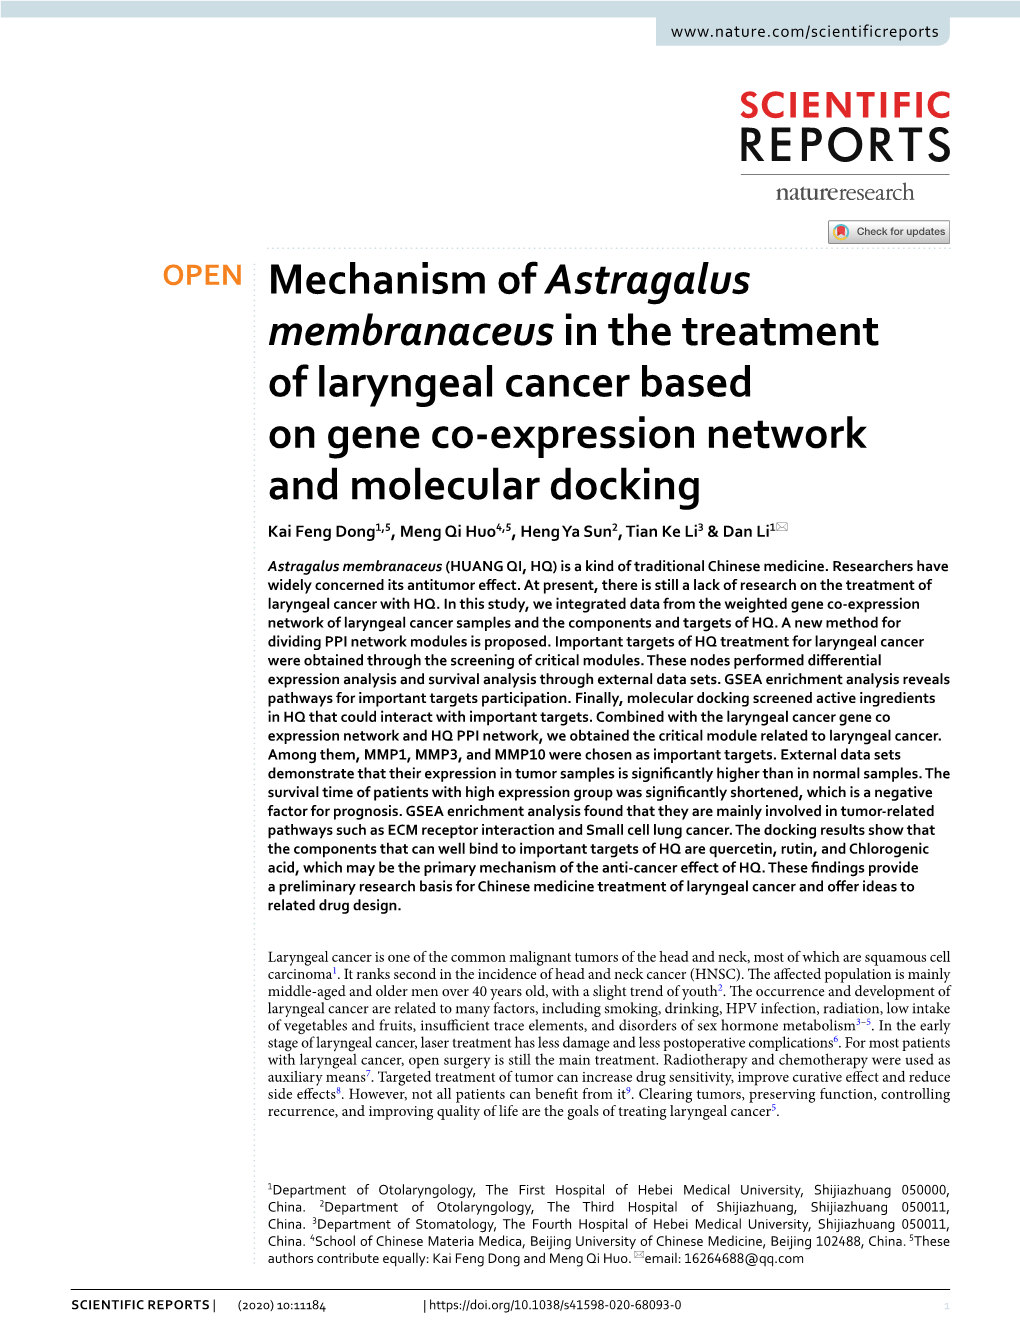 Mechanism of Astragalus Membranaceus in the Treatment Of